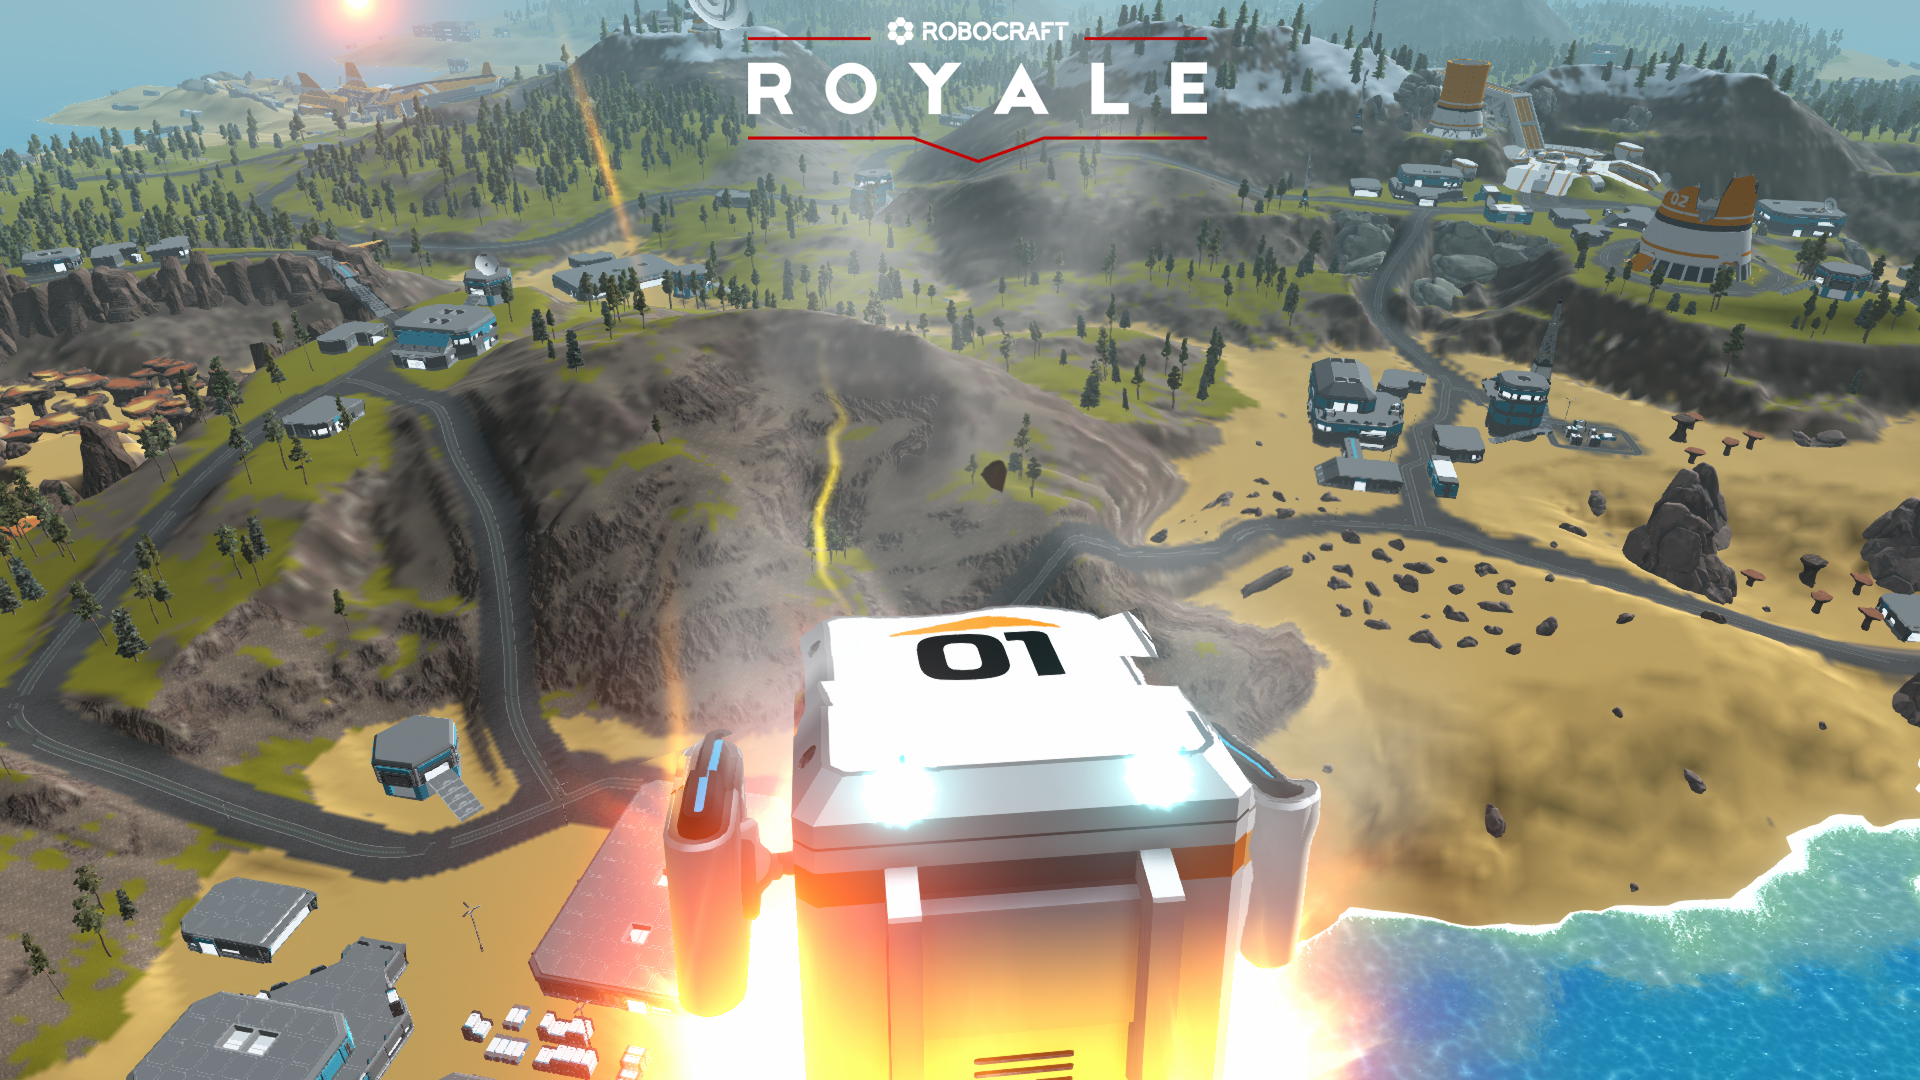 Robocraft Royale screenshot